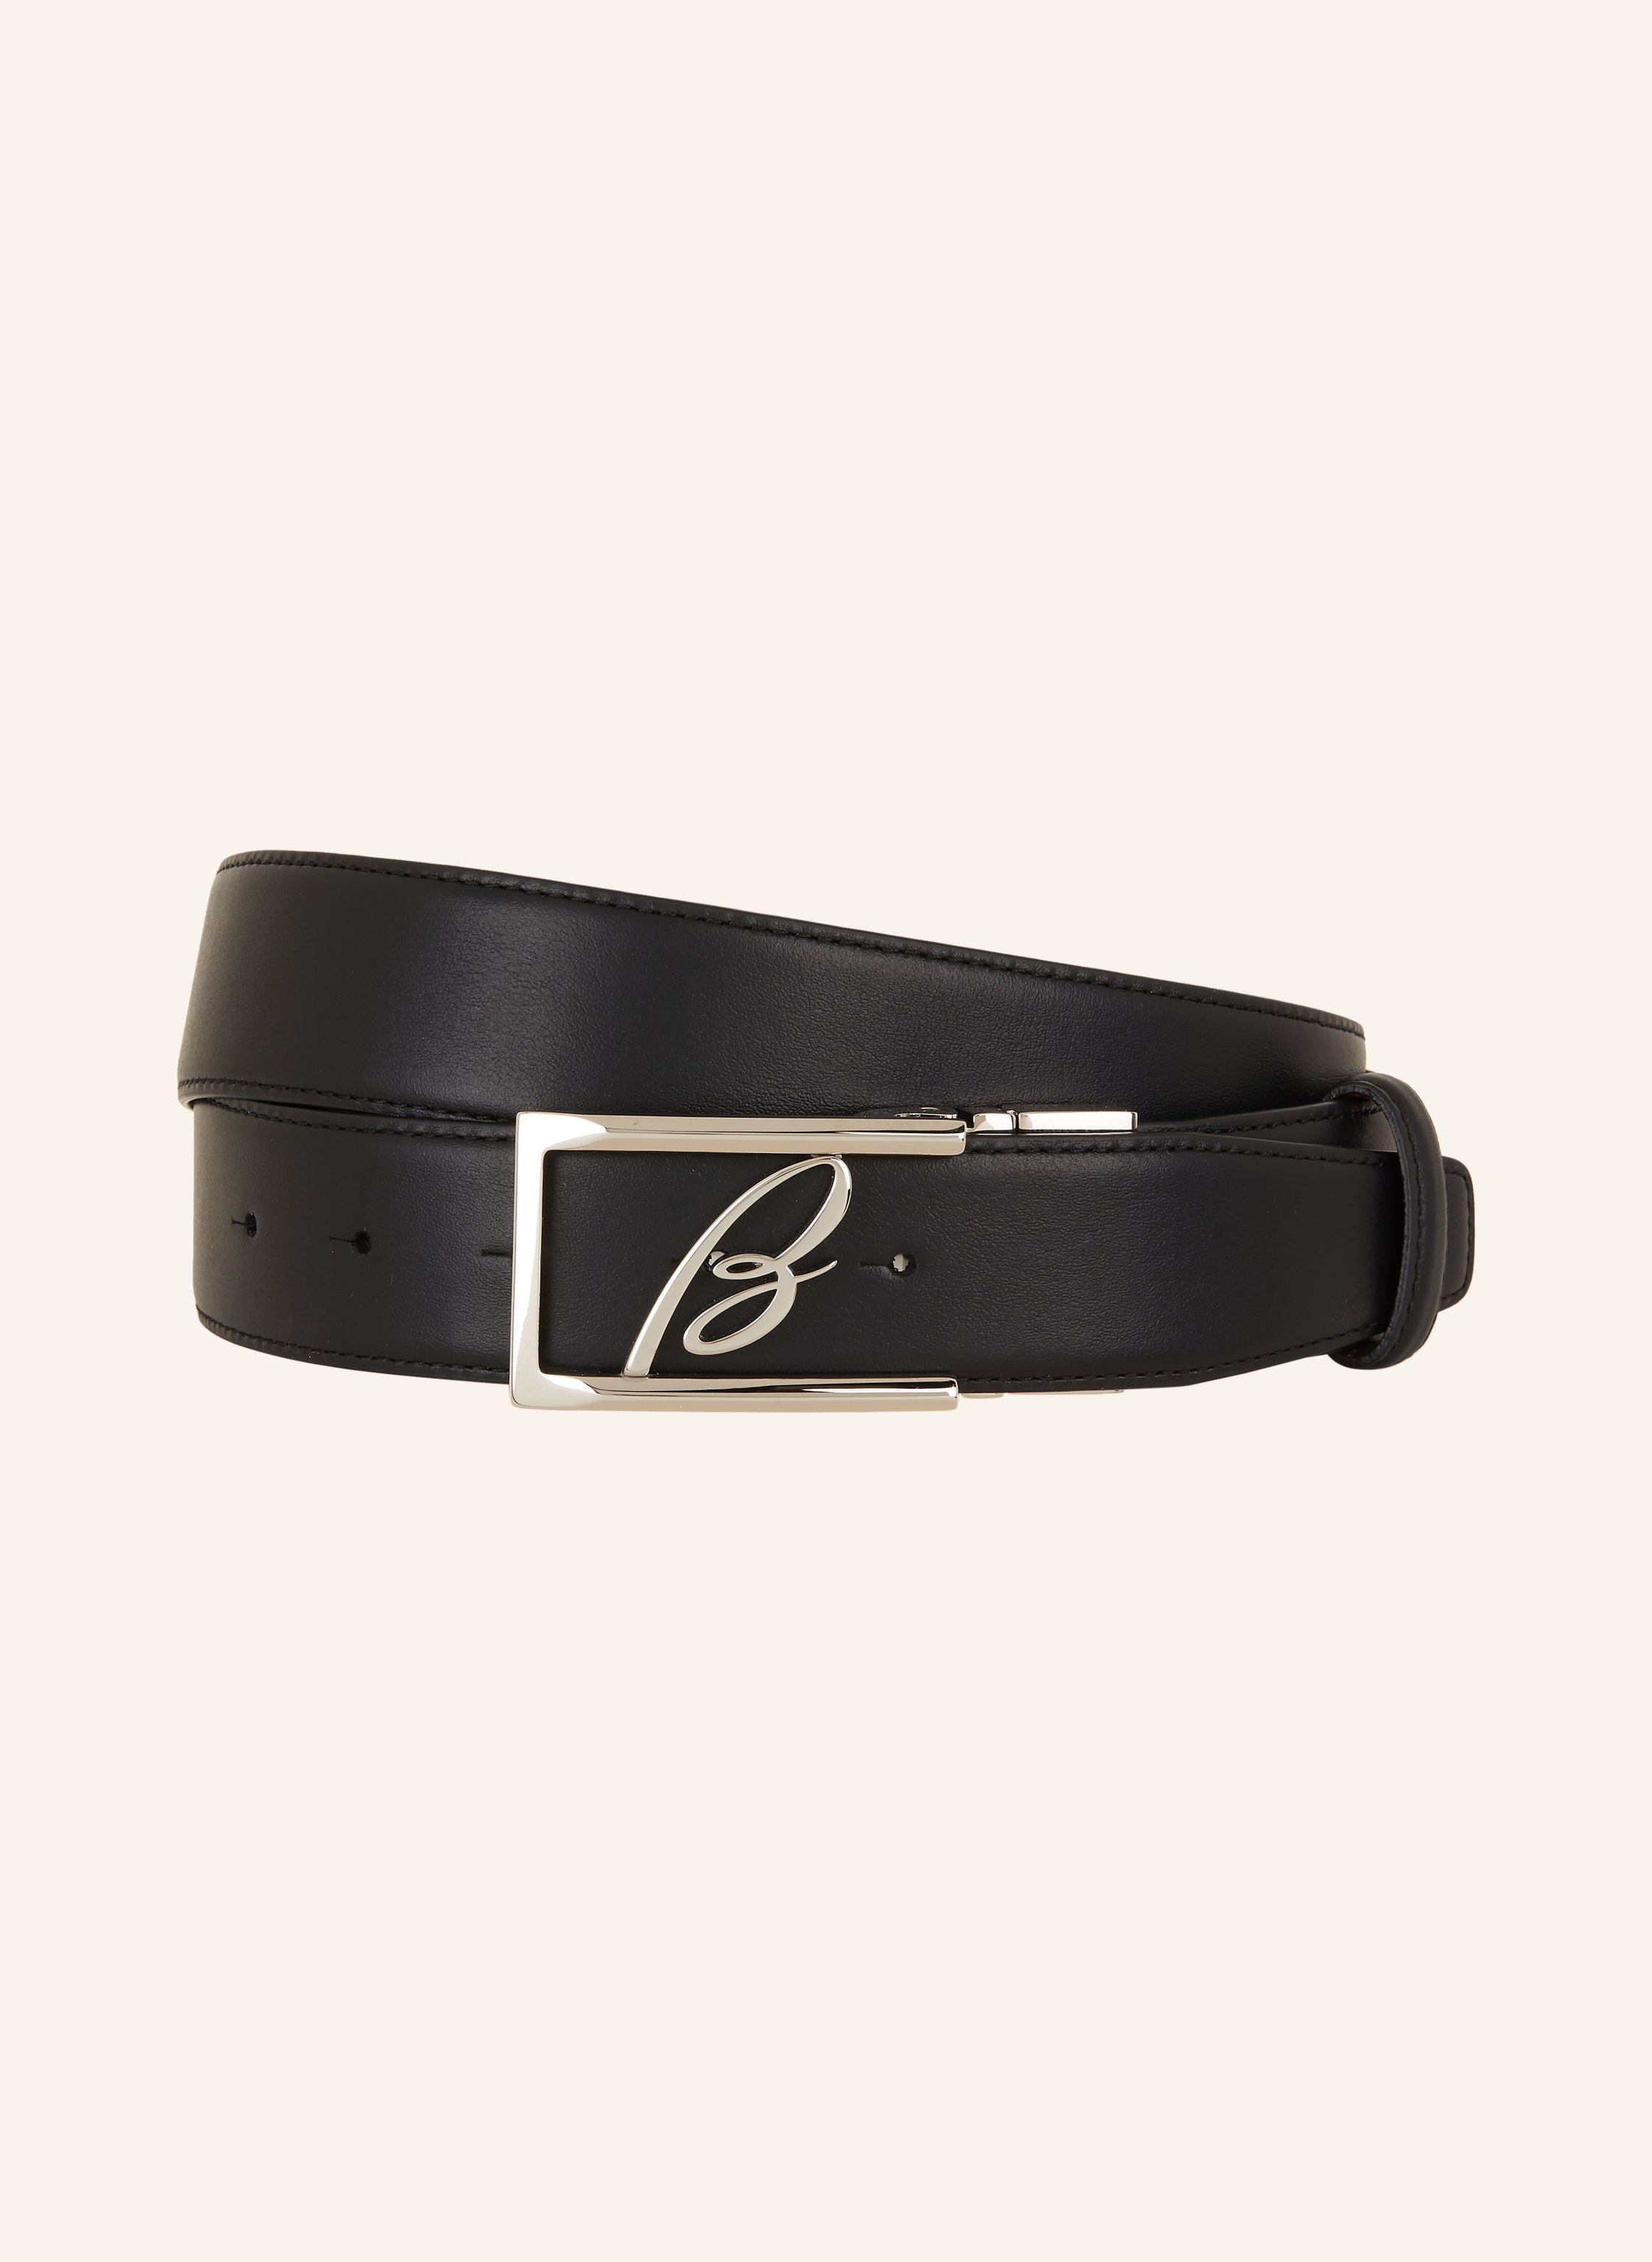 Brioni Reversible leather belt in black/ dark brown